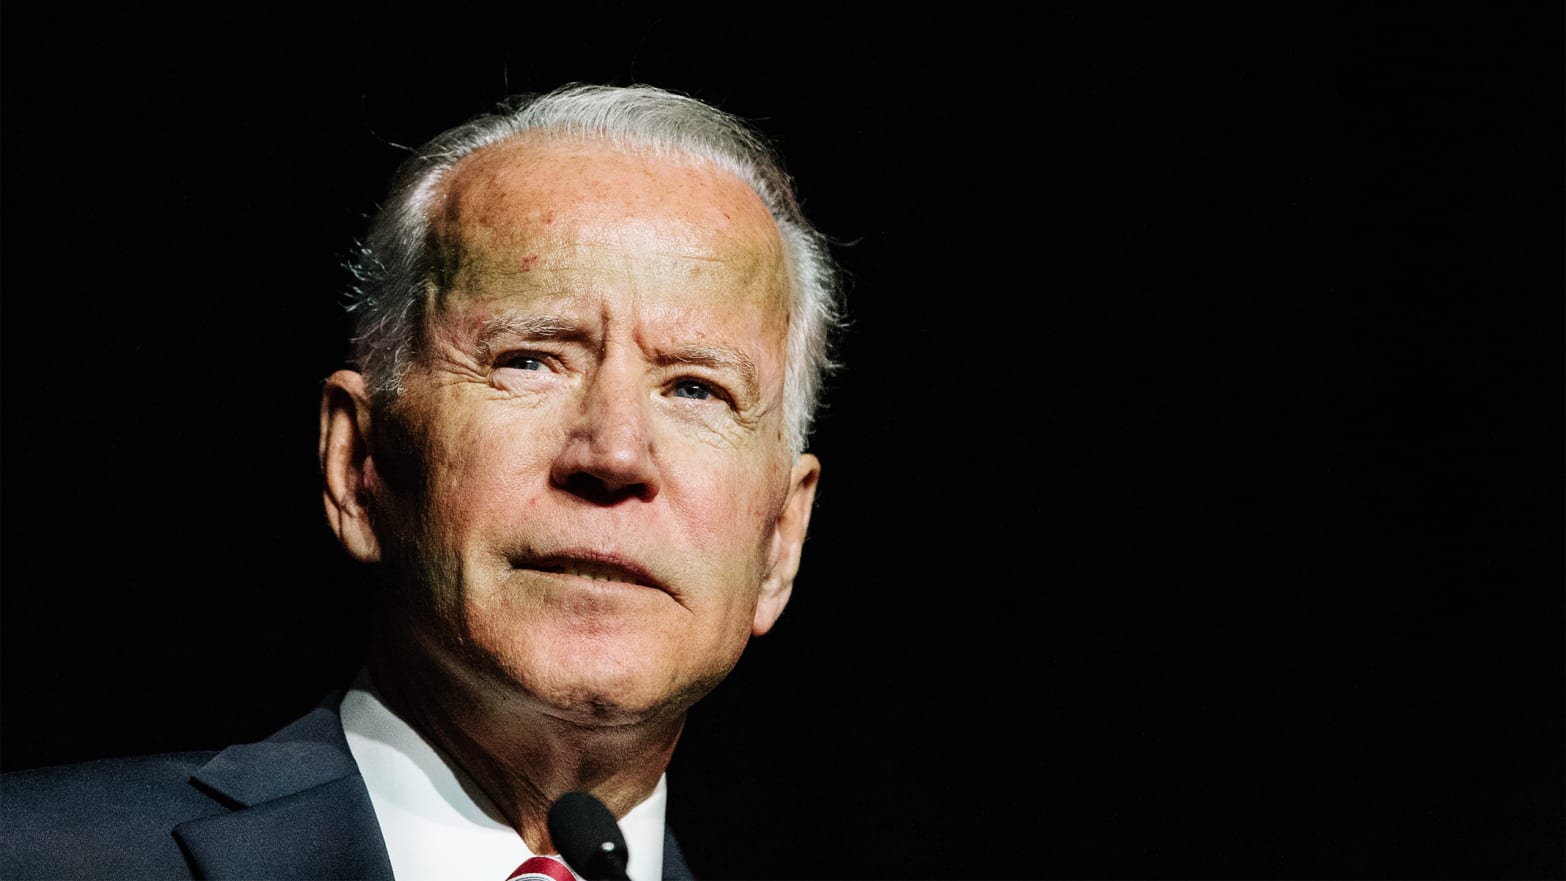 rive ned Kiks svamp Even if It's Not 'Sexual,' Joe Biden's Creepy Touching Crosses the Line